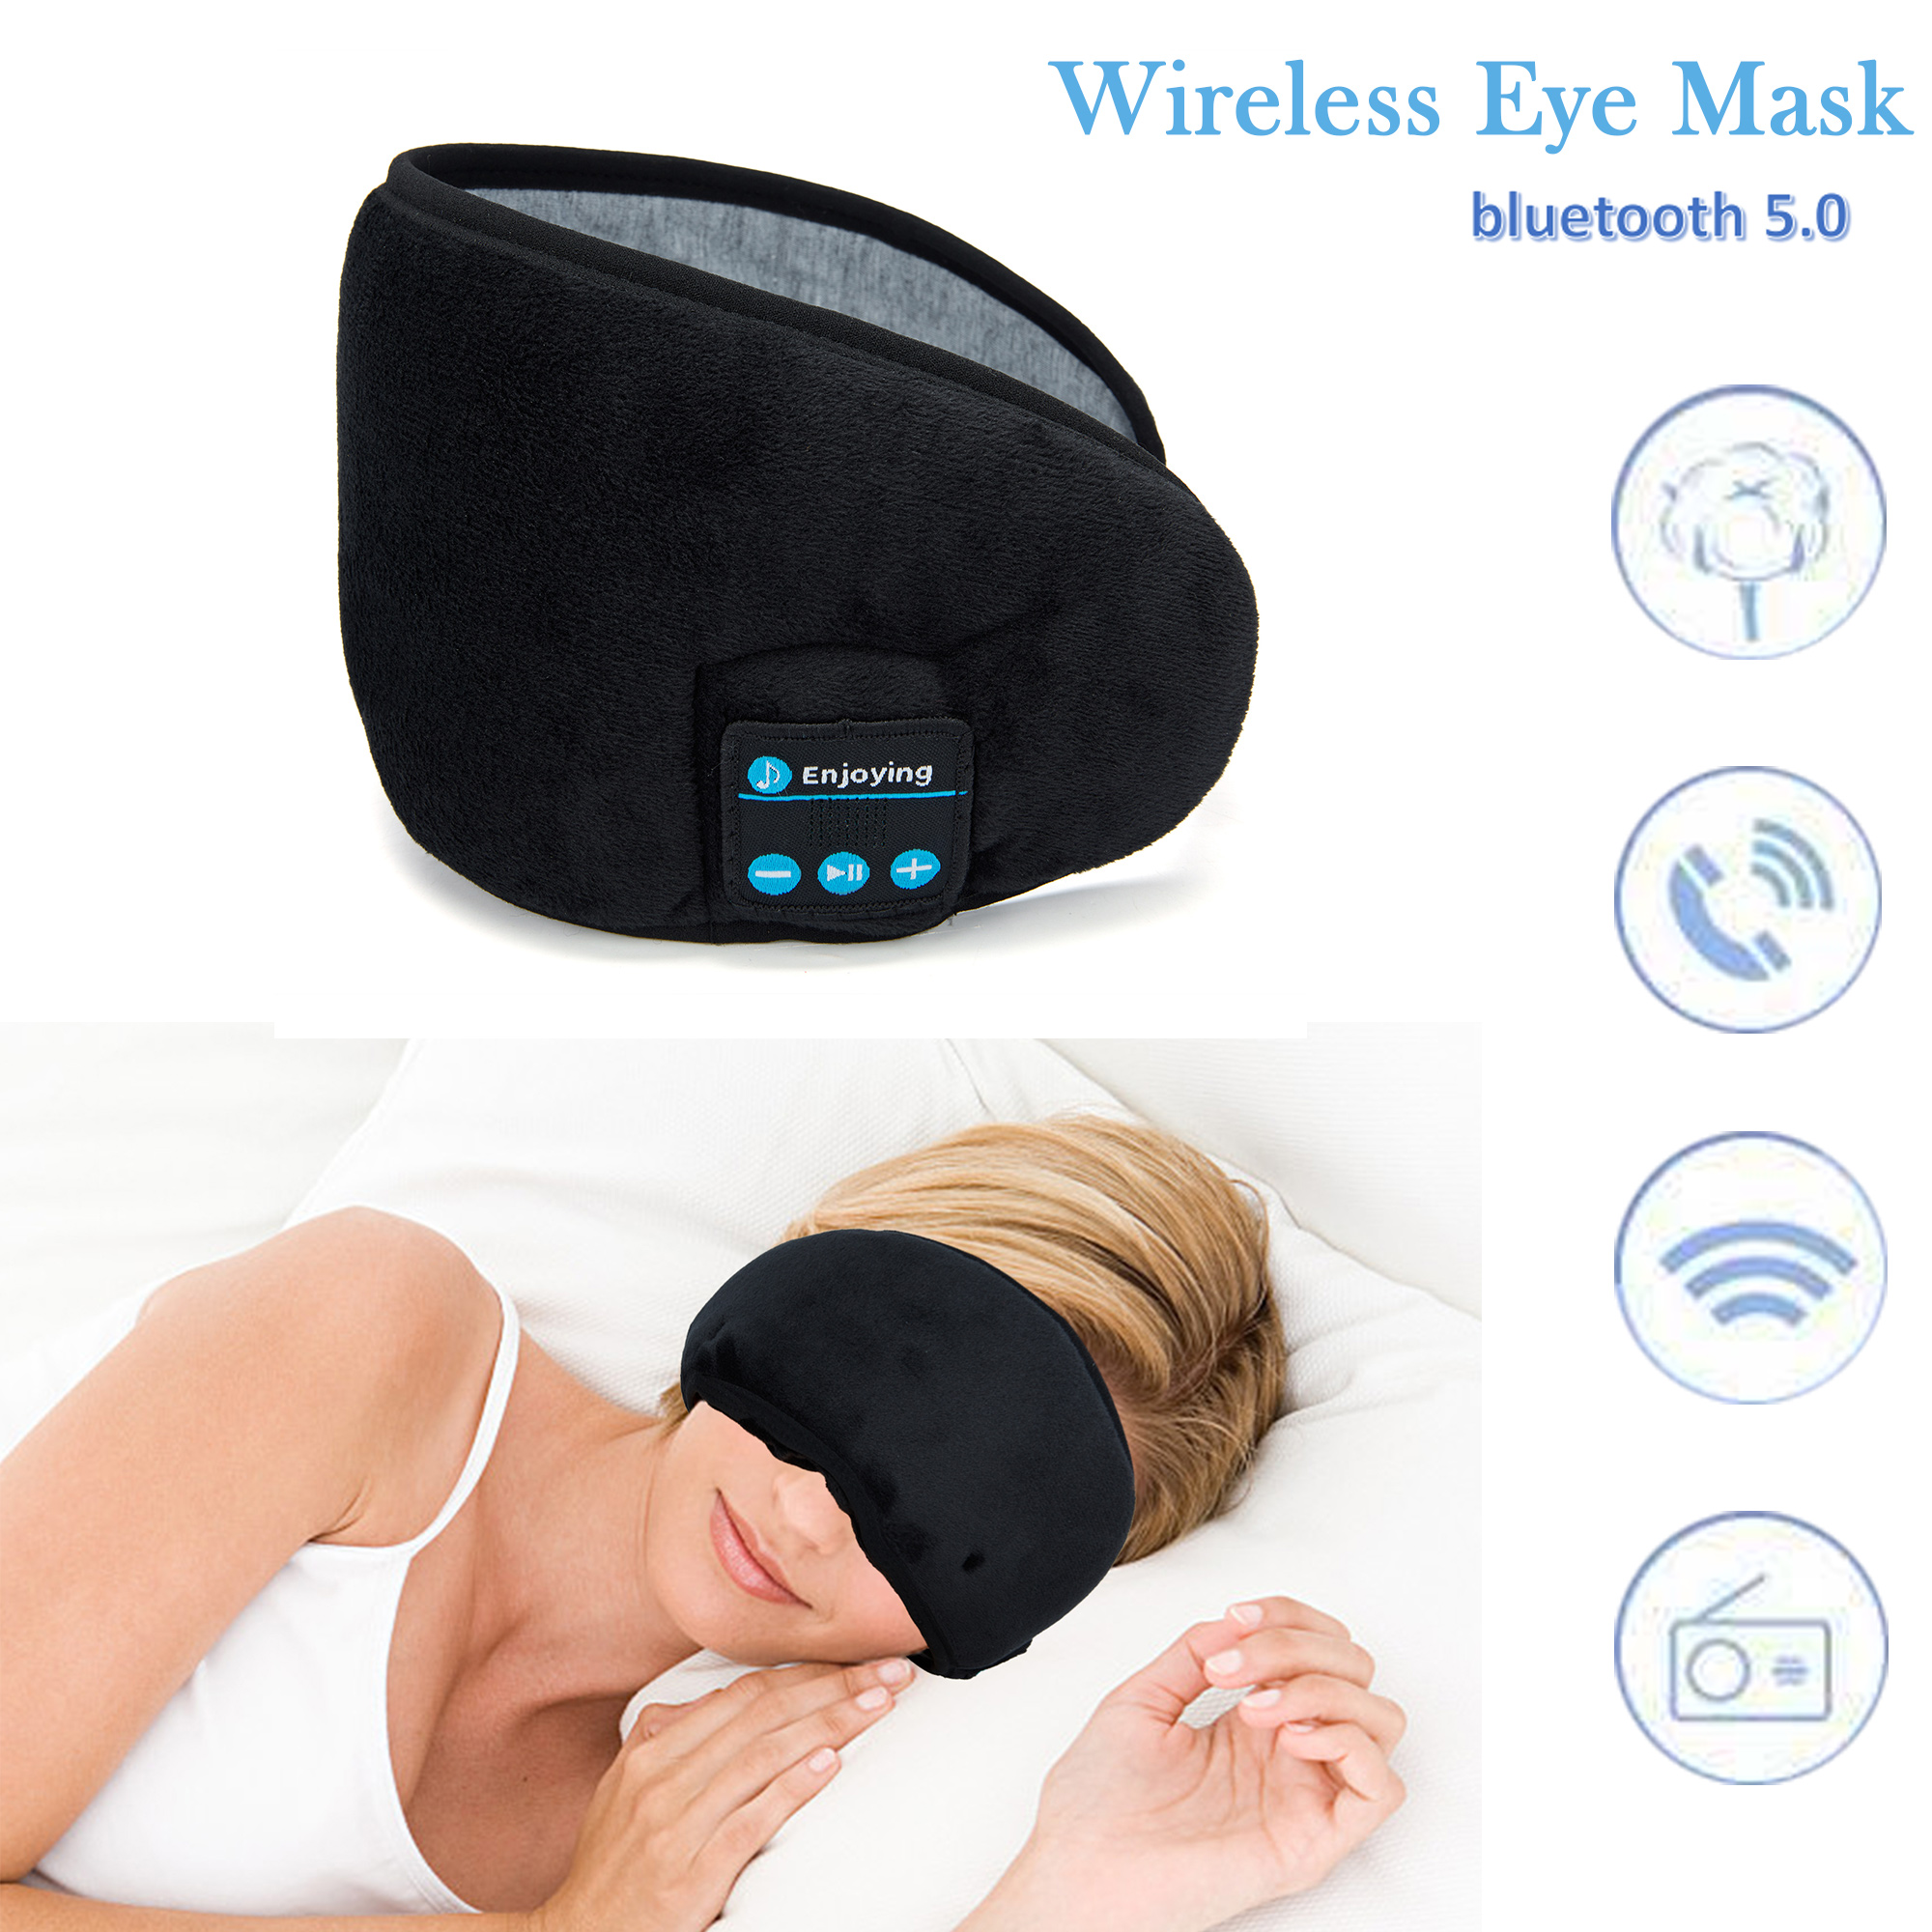 LELINTA Wireless bluetooth Eye Mask, Wireless bluetooth Headphones For Sleep, Travel Music Eye Cover bluetooth Headsets with Microphone Handsfree,Gray/Black - image 1 of 8